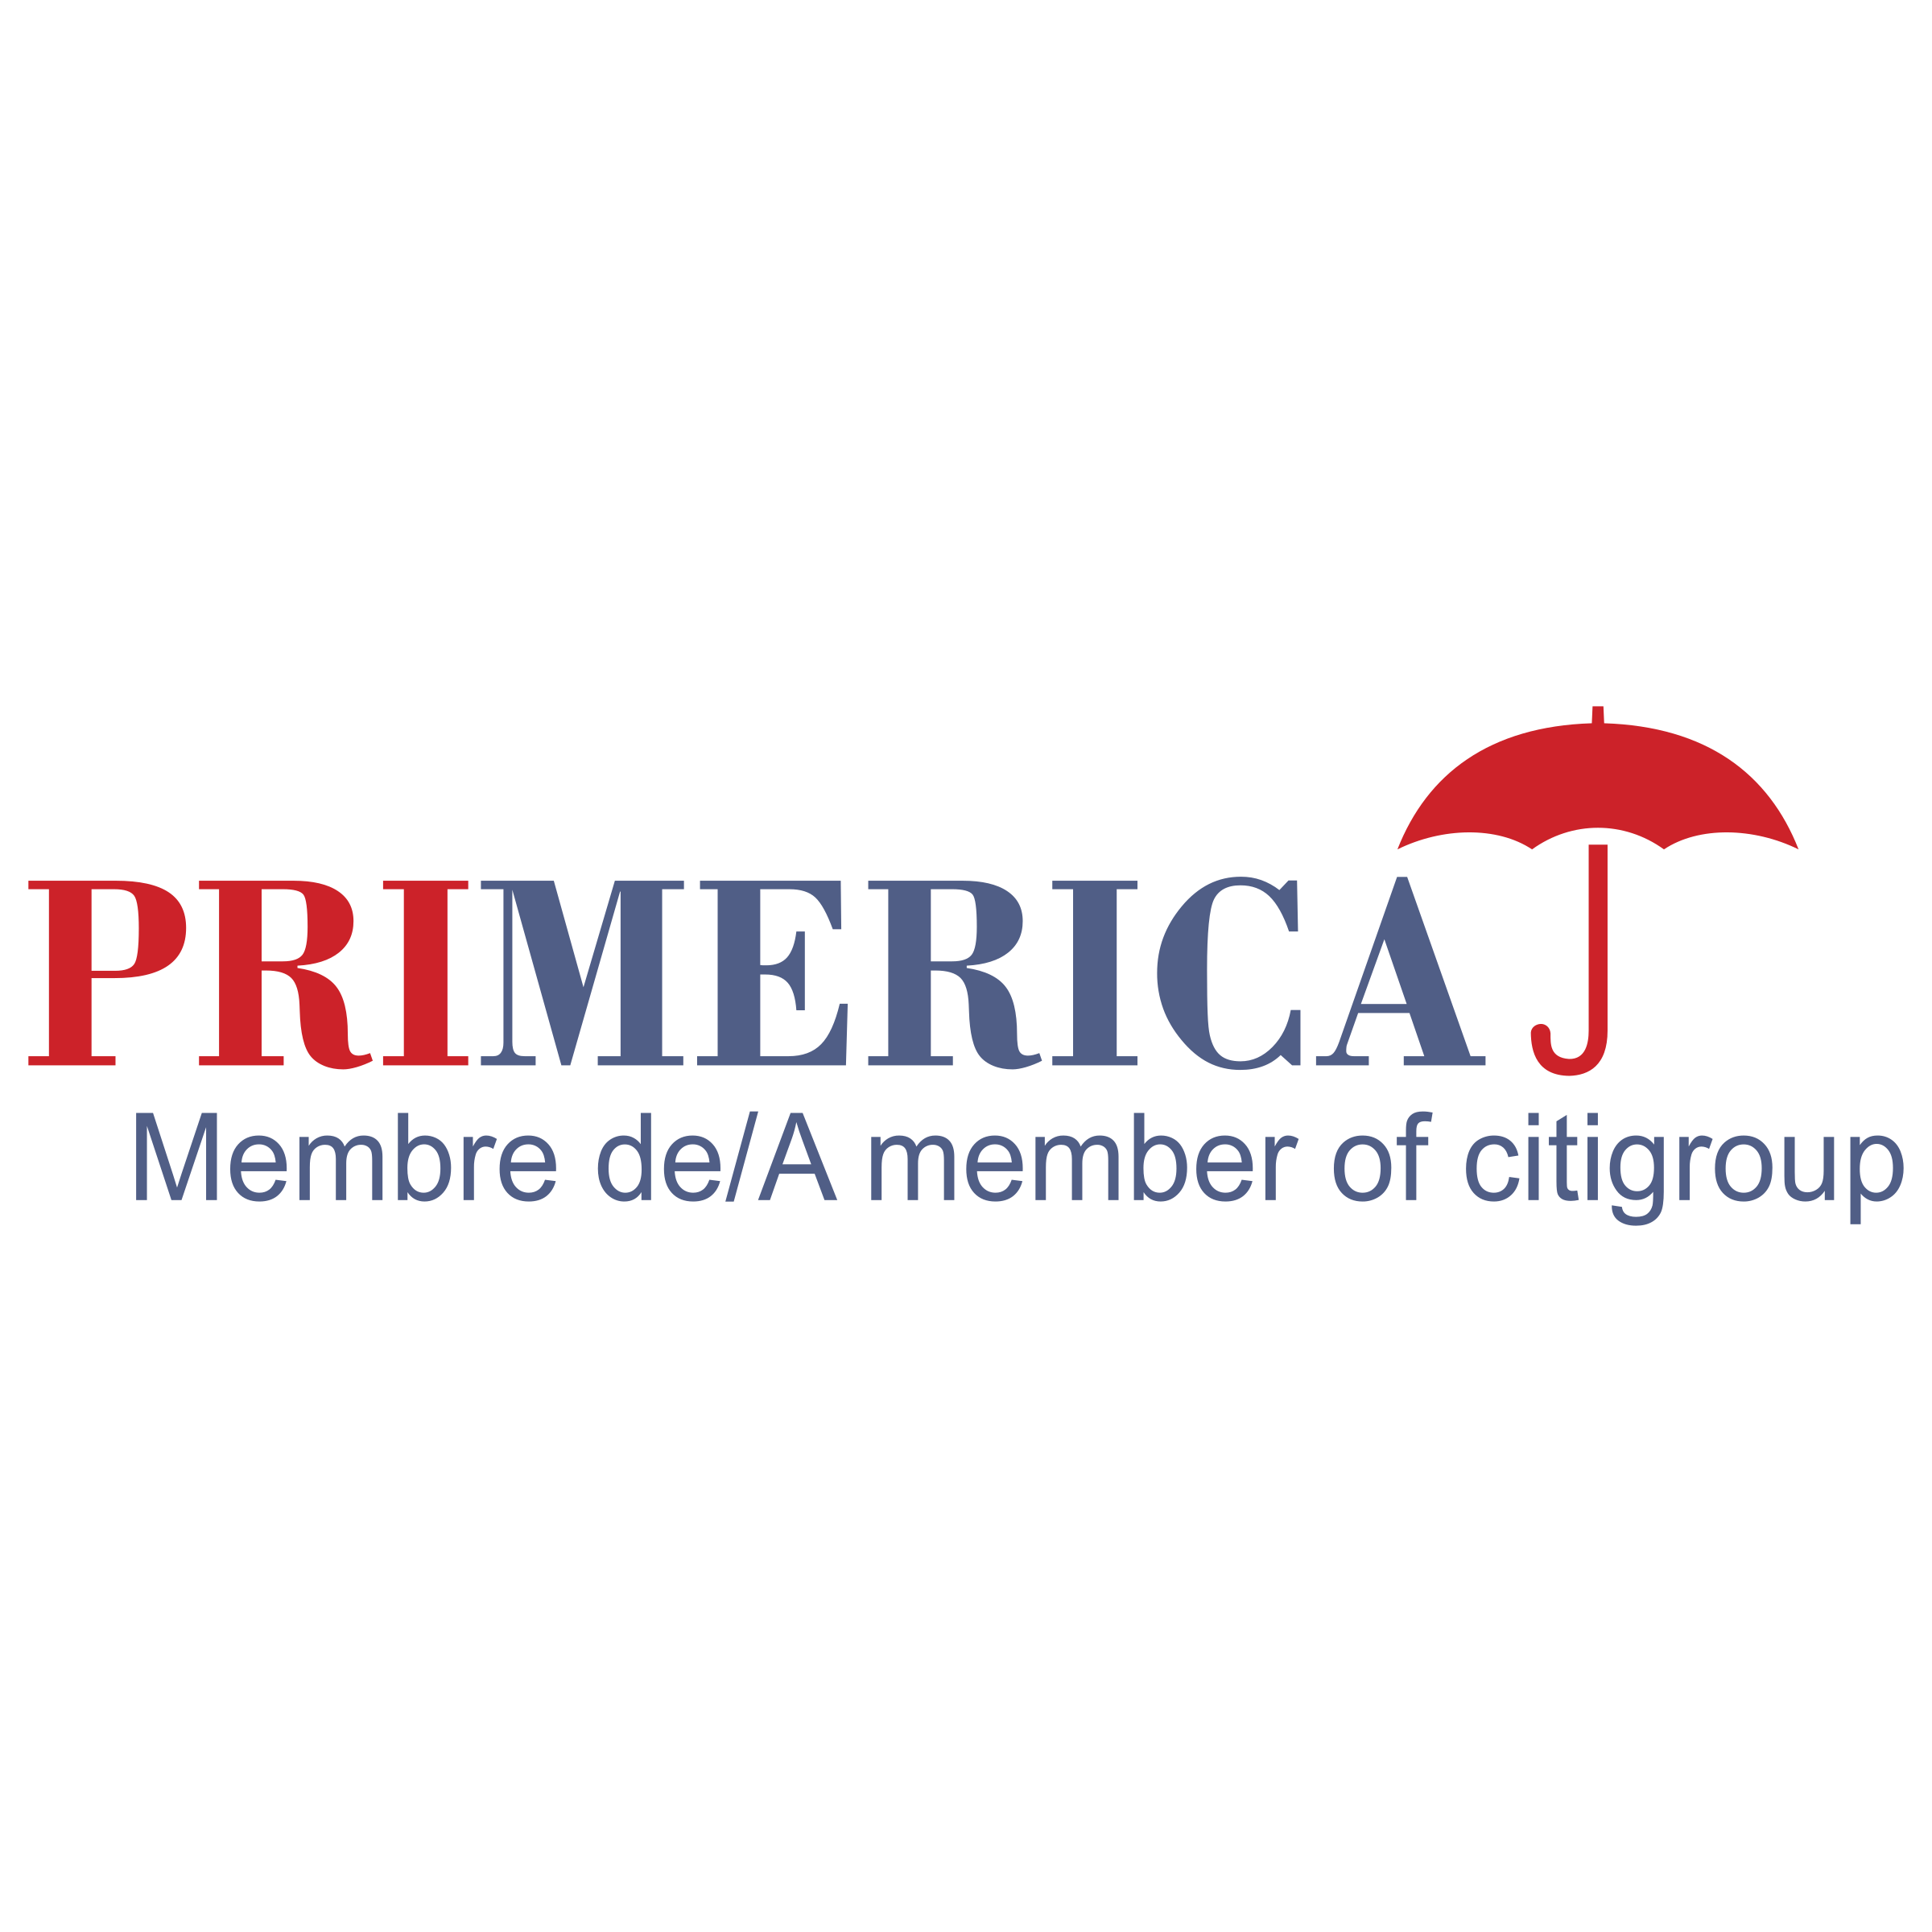 Primerica Logo Png Image